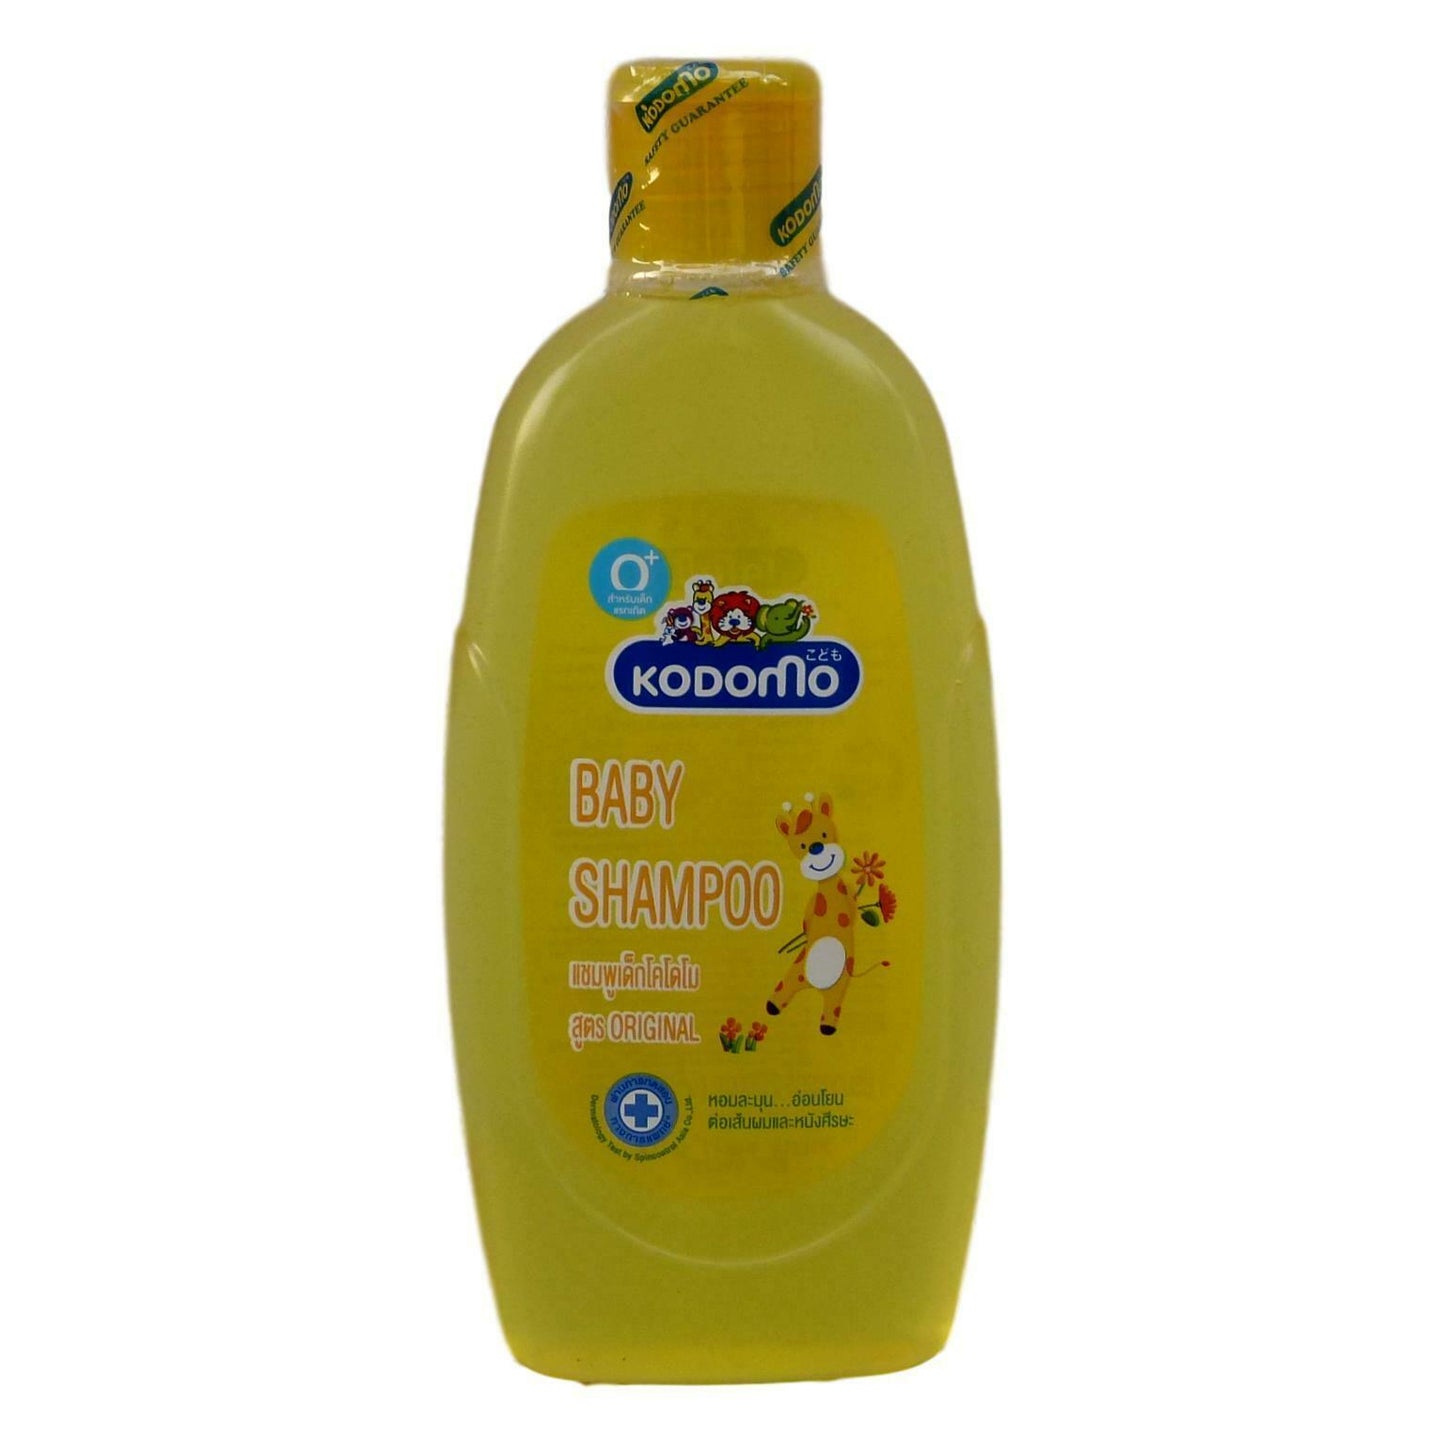 Kodomo Baby Shampoo for Newborn Babies 200ml - Asian Beauty Supply